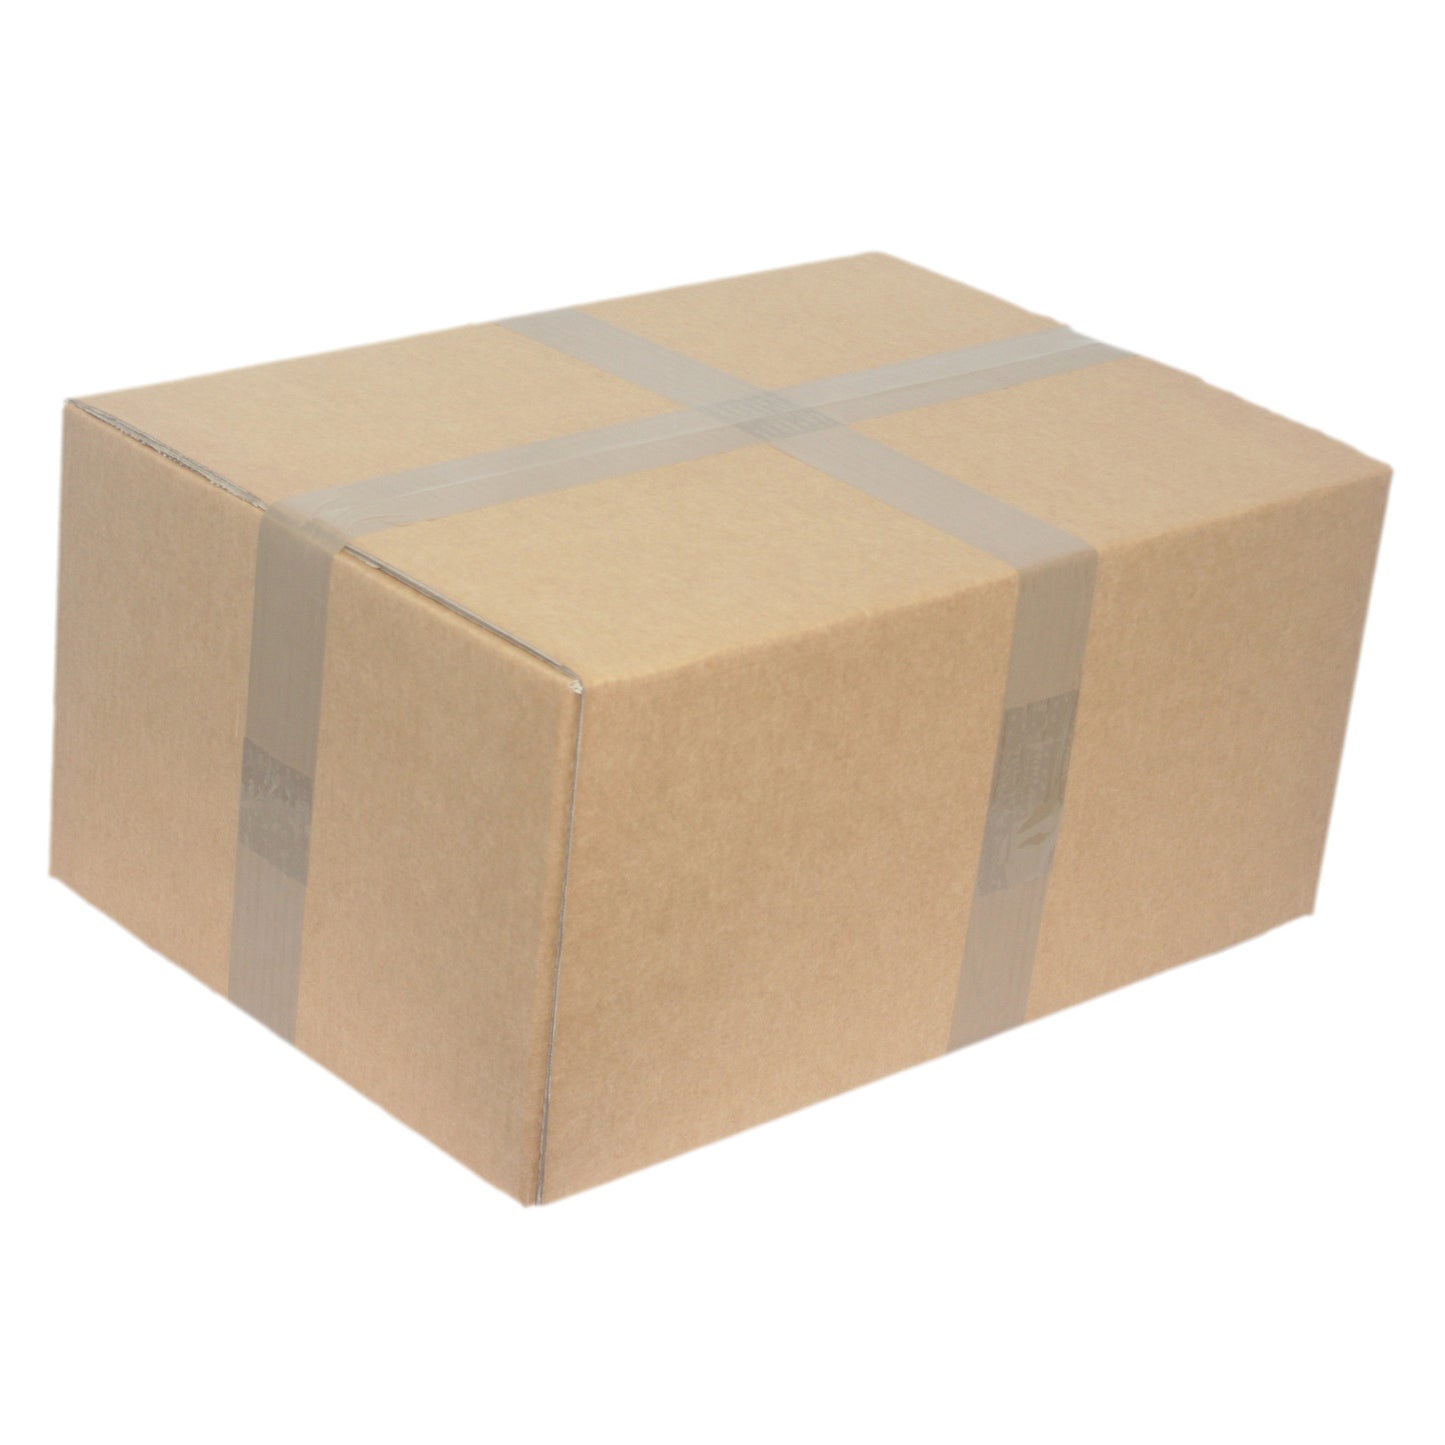 14 Inch Shipping Carton